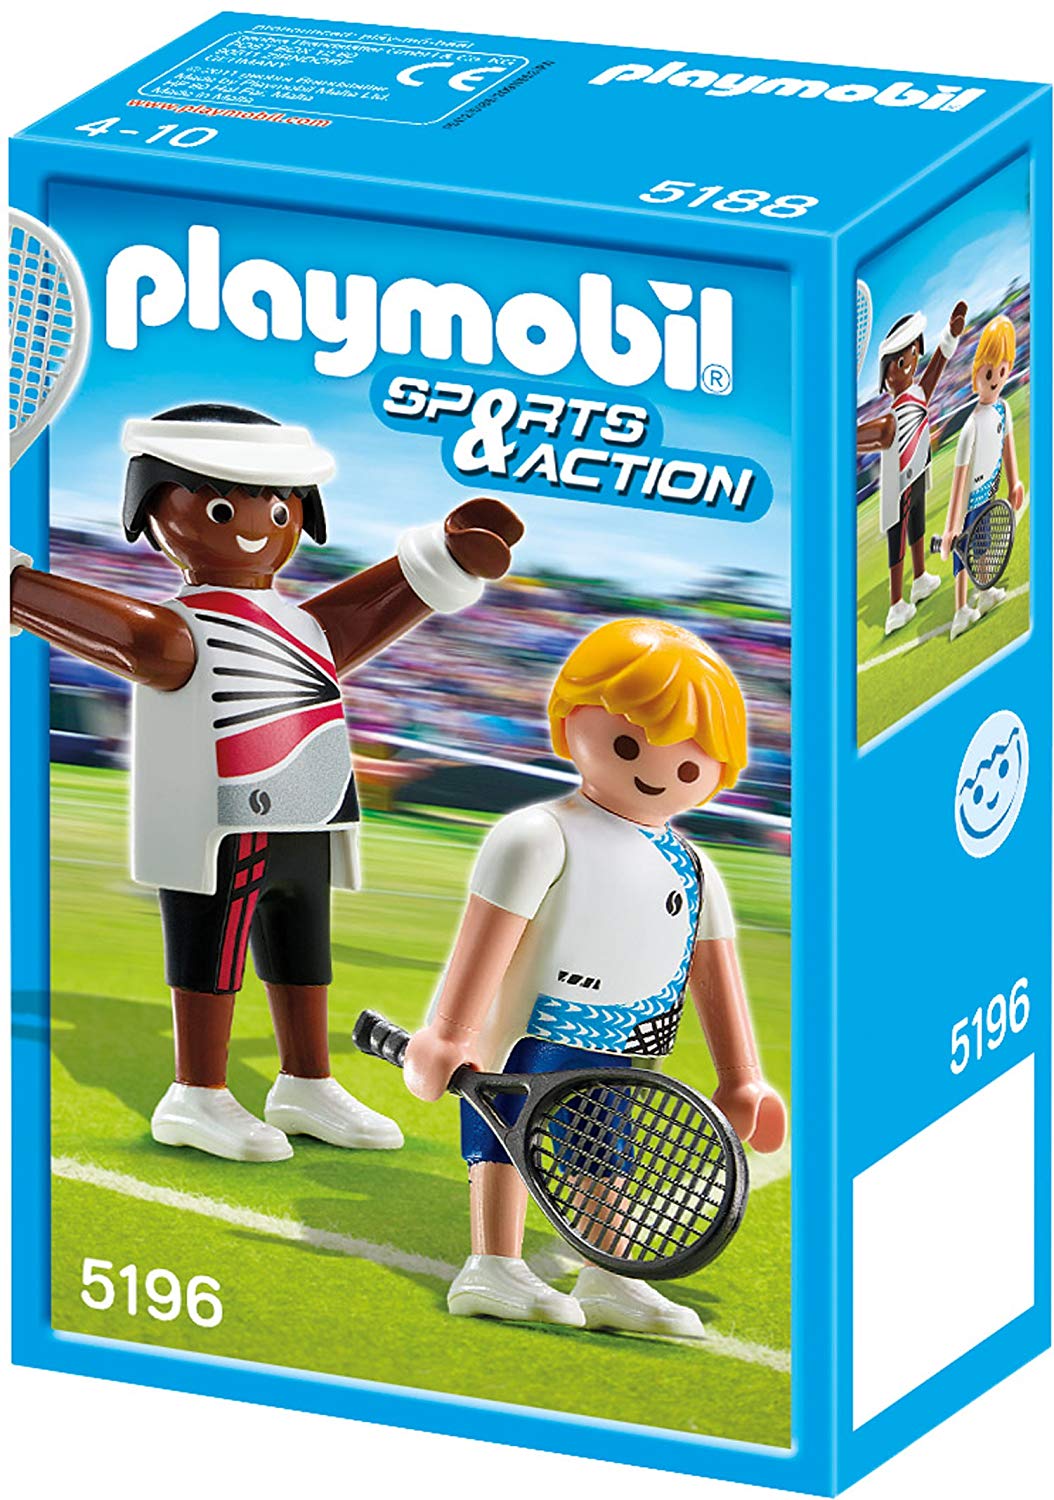 Playmobil 5196 Two Tennis Players